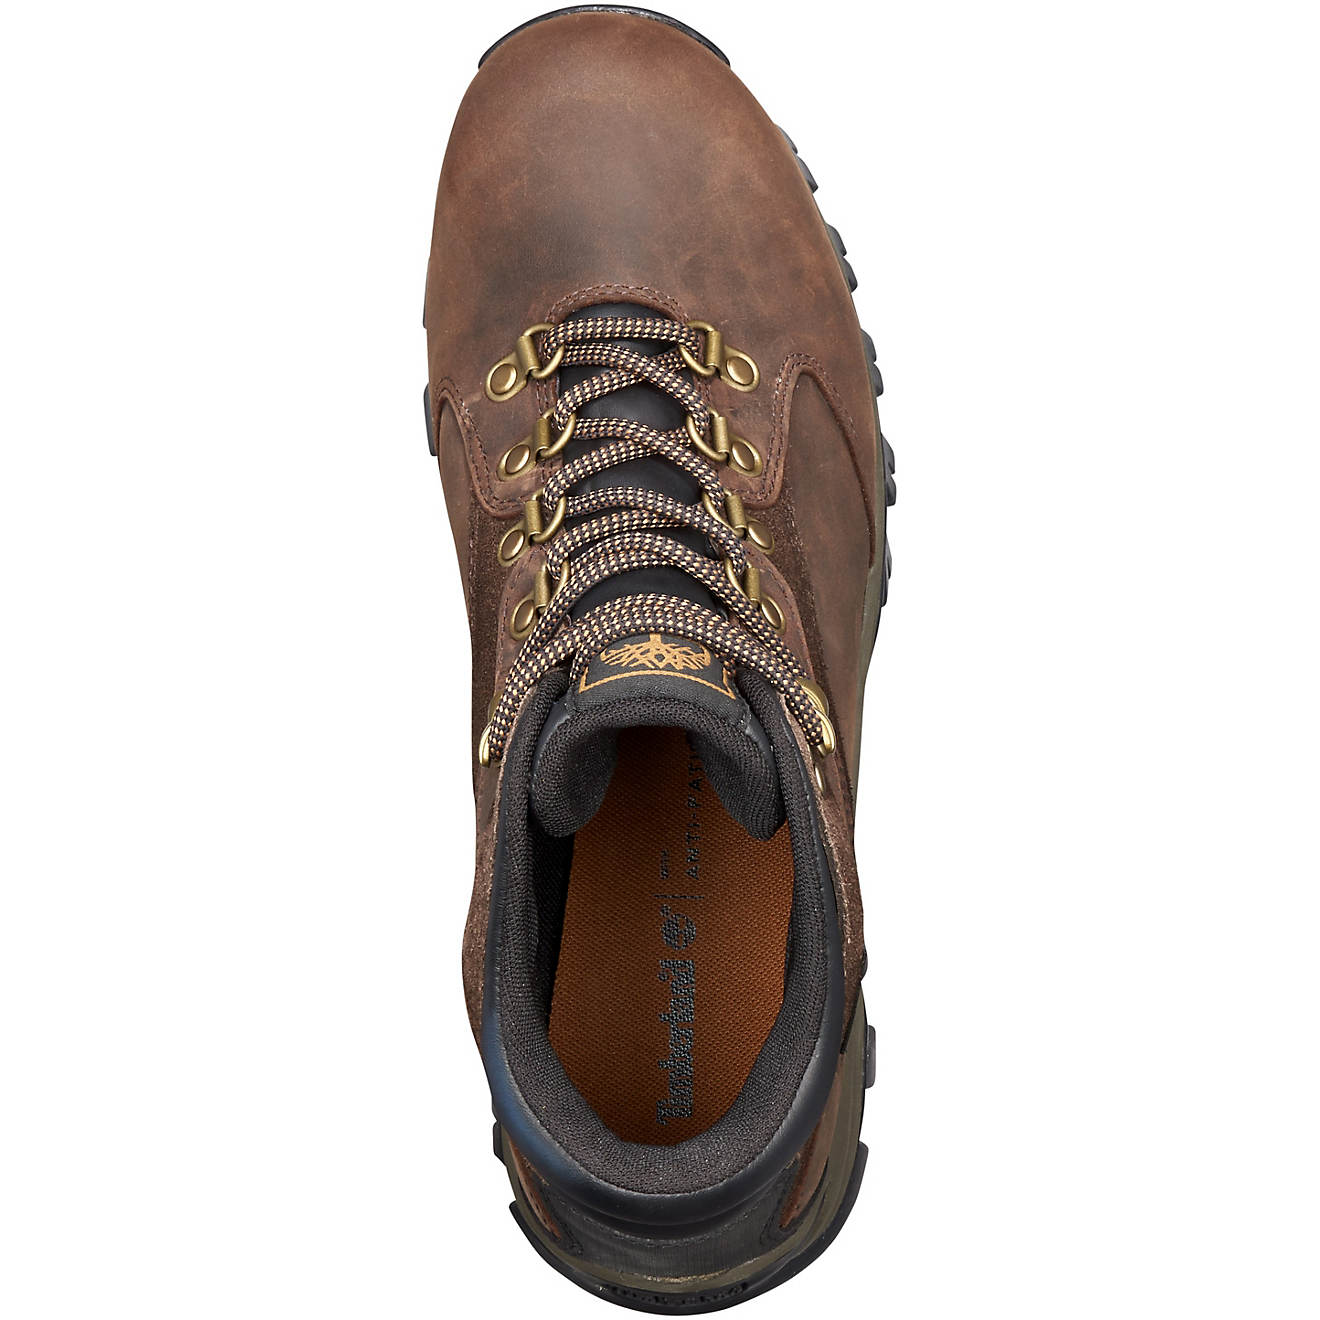 Timberland Men's Rock Rimmon Waterproof Hiking Boots